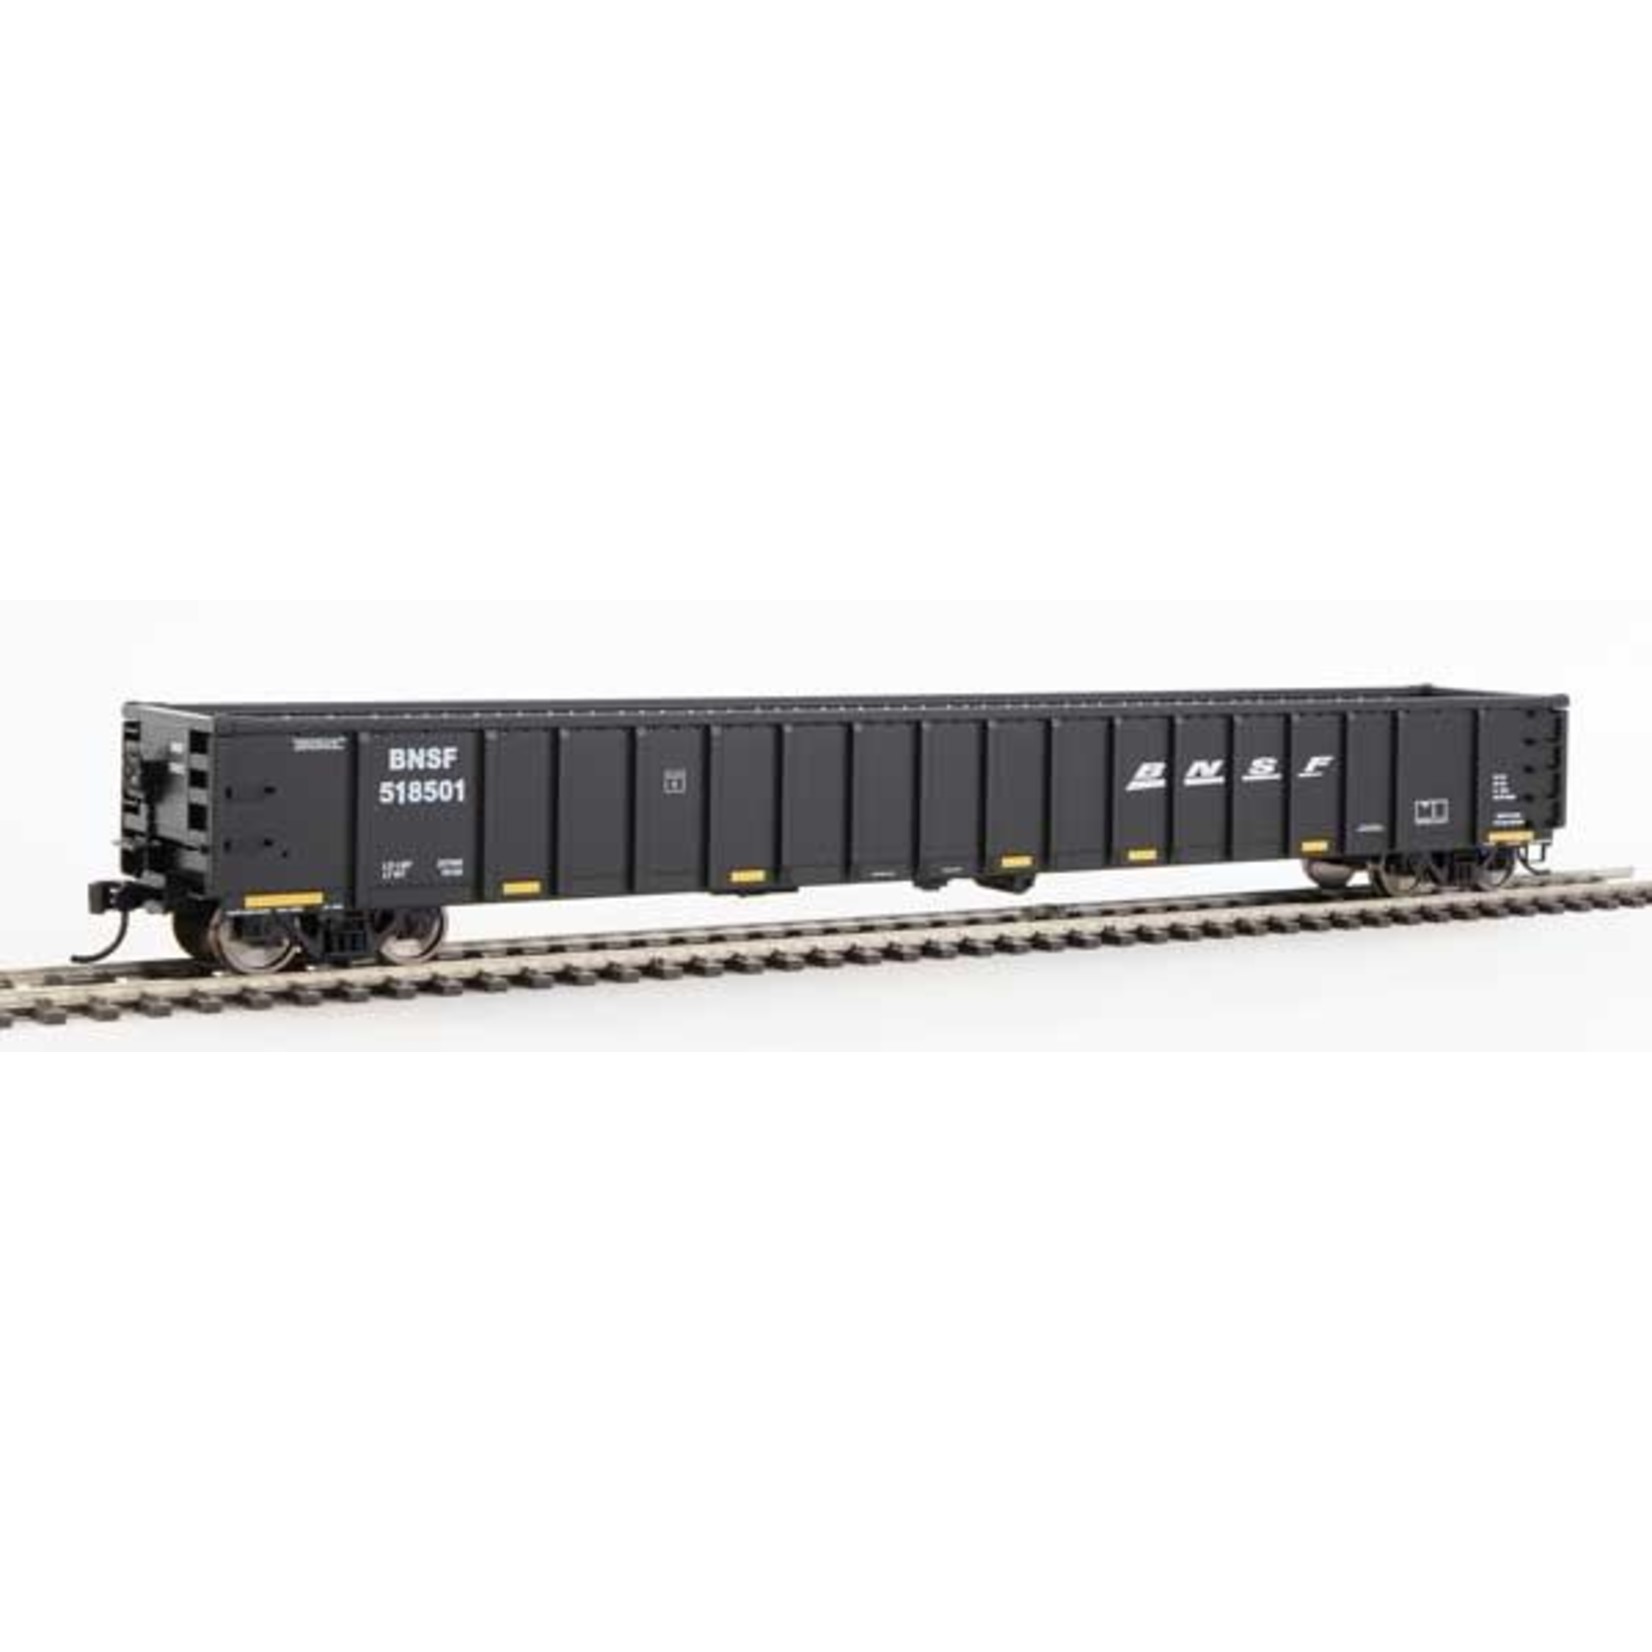 Walthers Mainline HO 68' Railgon Gondola - BNSF #518501